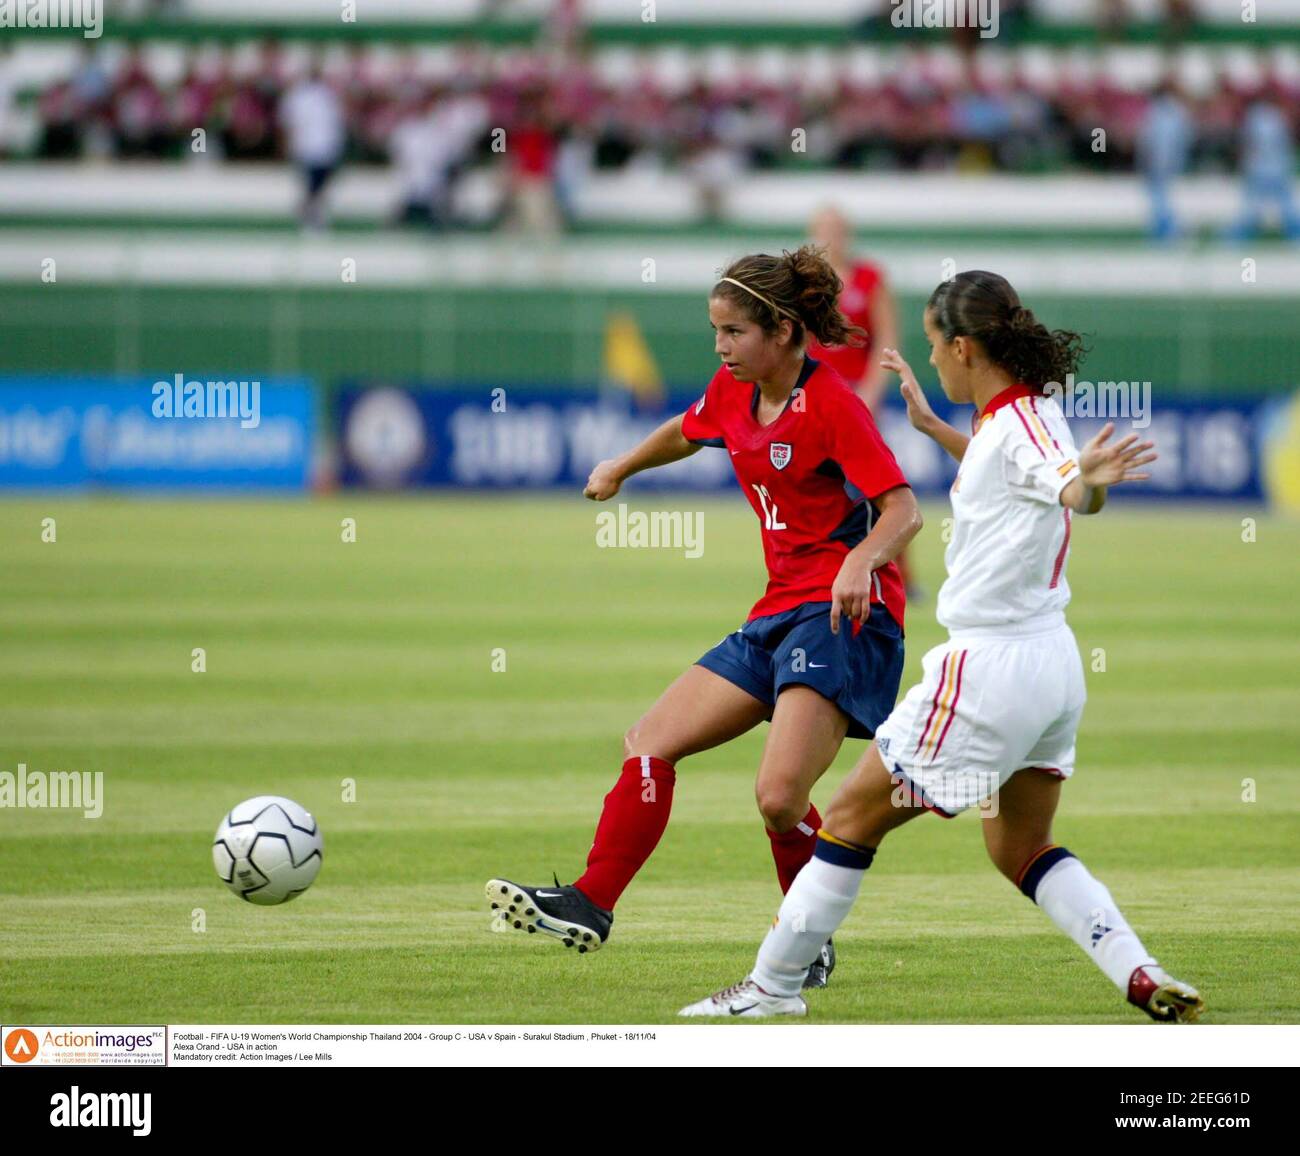 Football - FIFA U19 Women's World Championship Thailand 2004 - Group C -  USA v Spain - Surakul Stadium , Phuket - 18/11/04 Alexa Orand - USA in  action Mandatory credit: Action Images / Lee Mills Stock Photo - Alamy